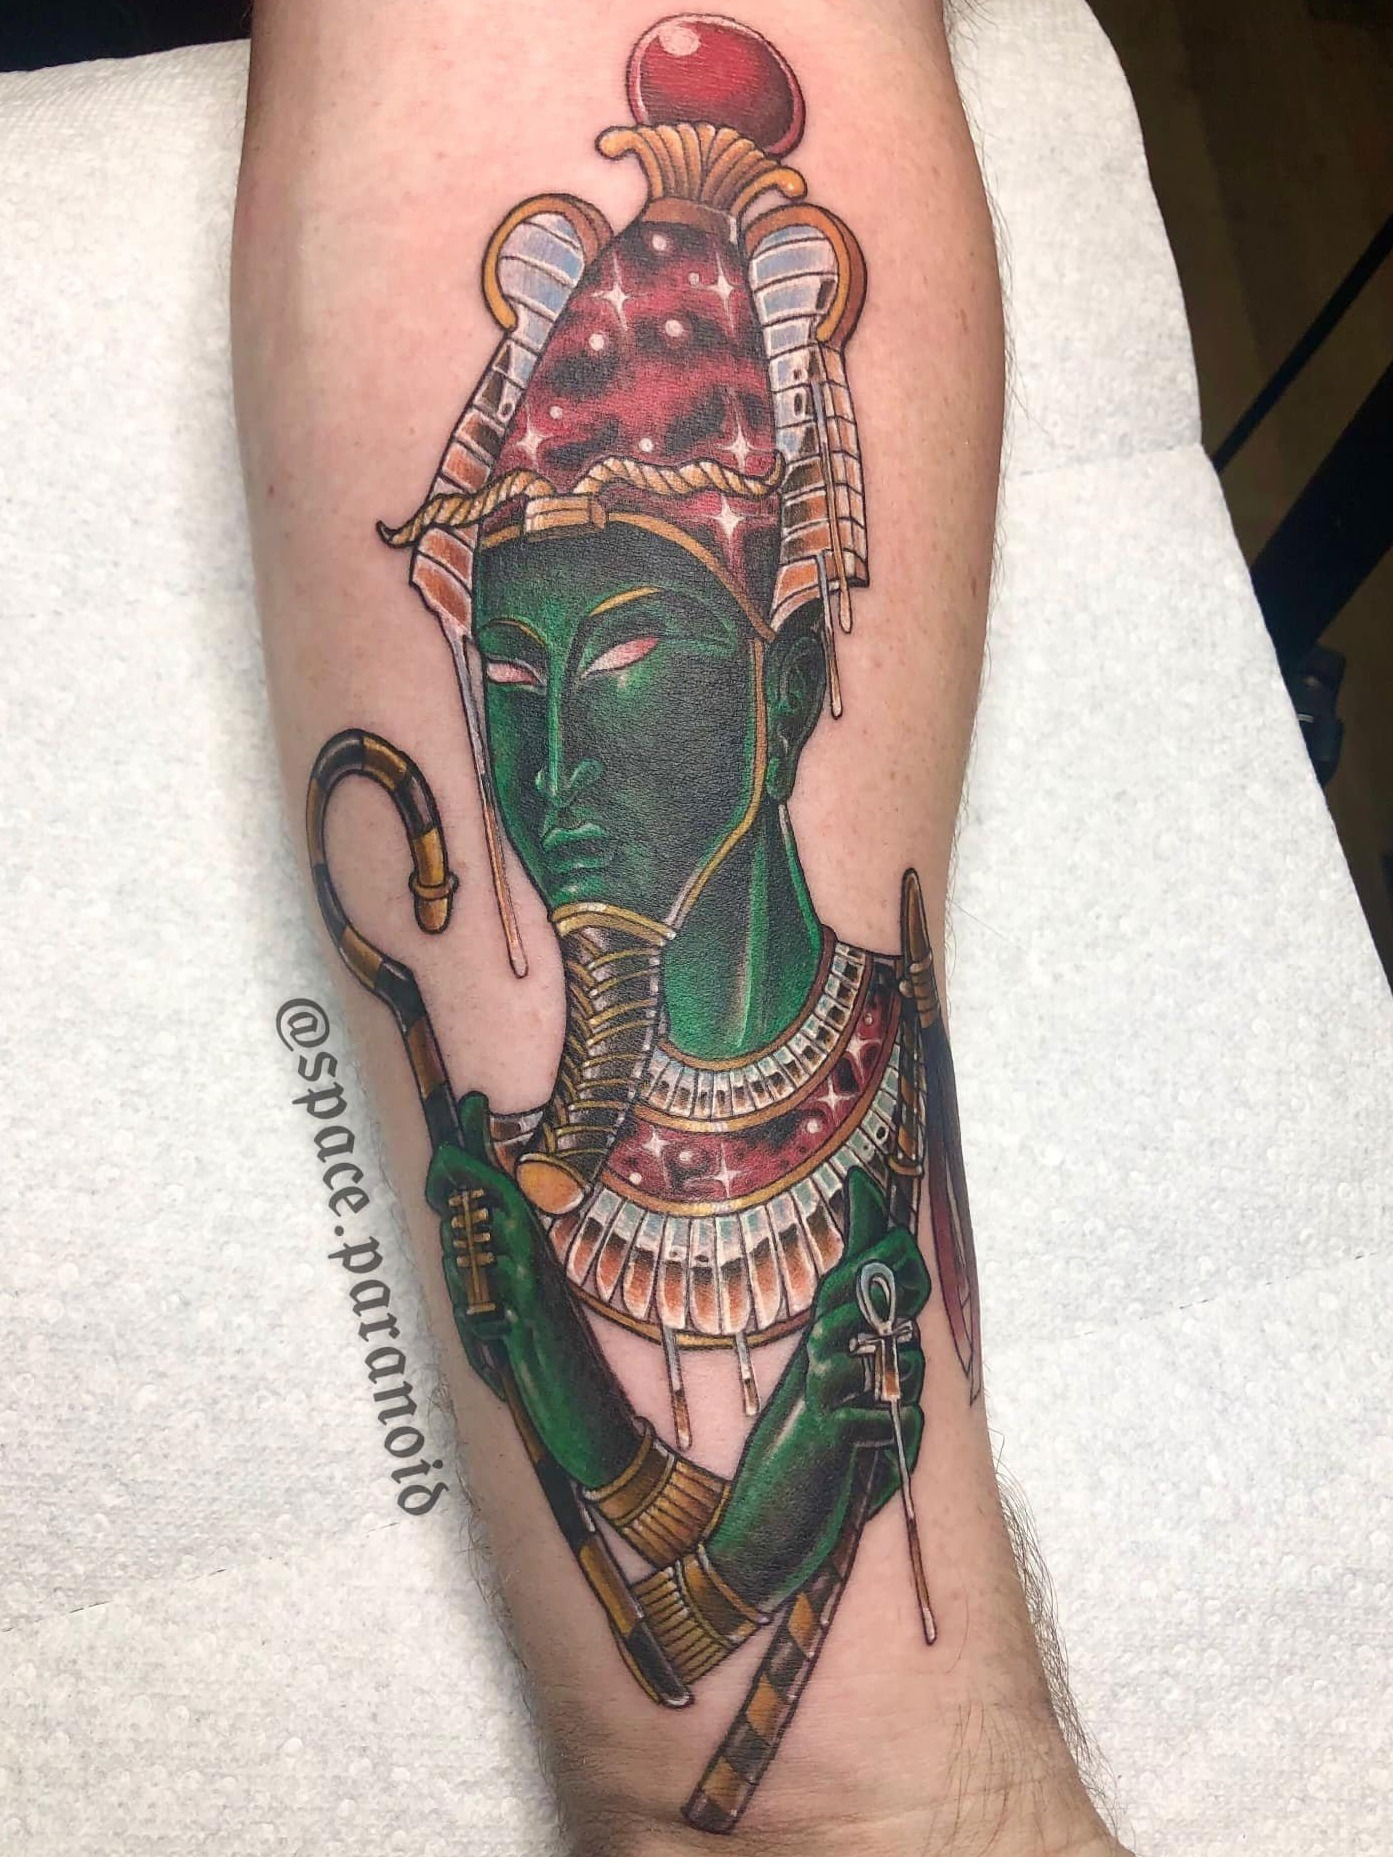 Cybertradtinoal Osiris (Ausir) Tattoo